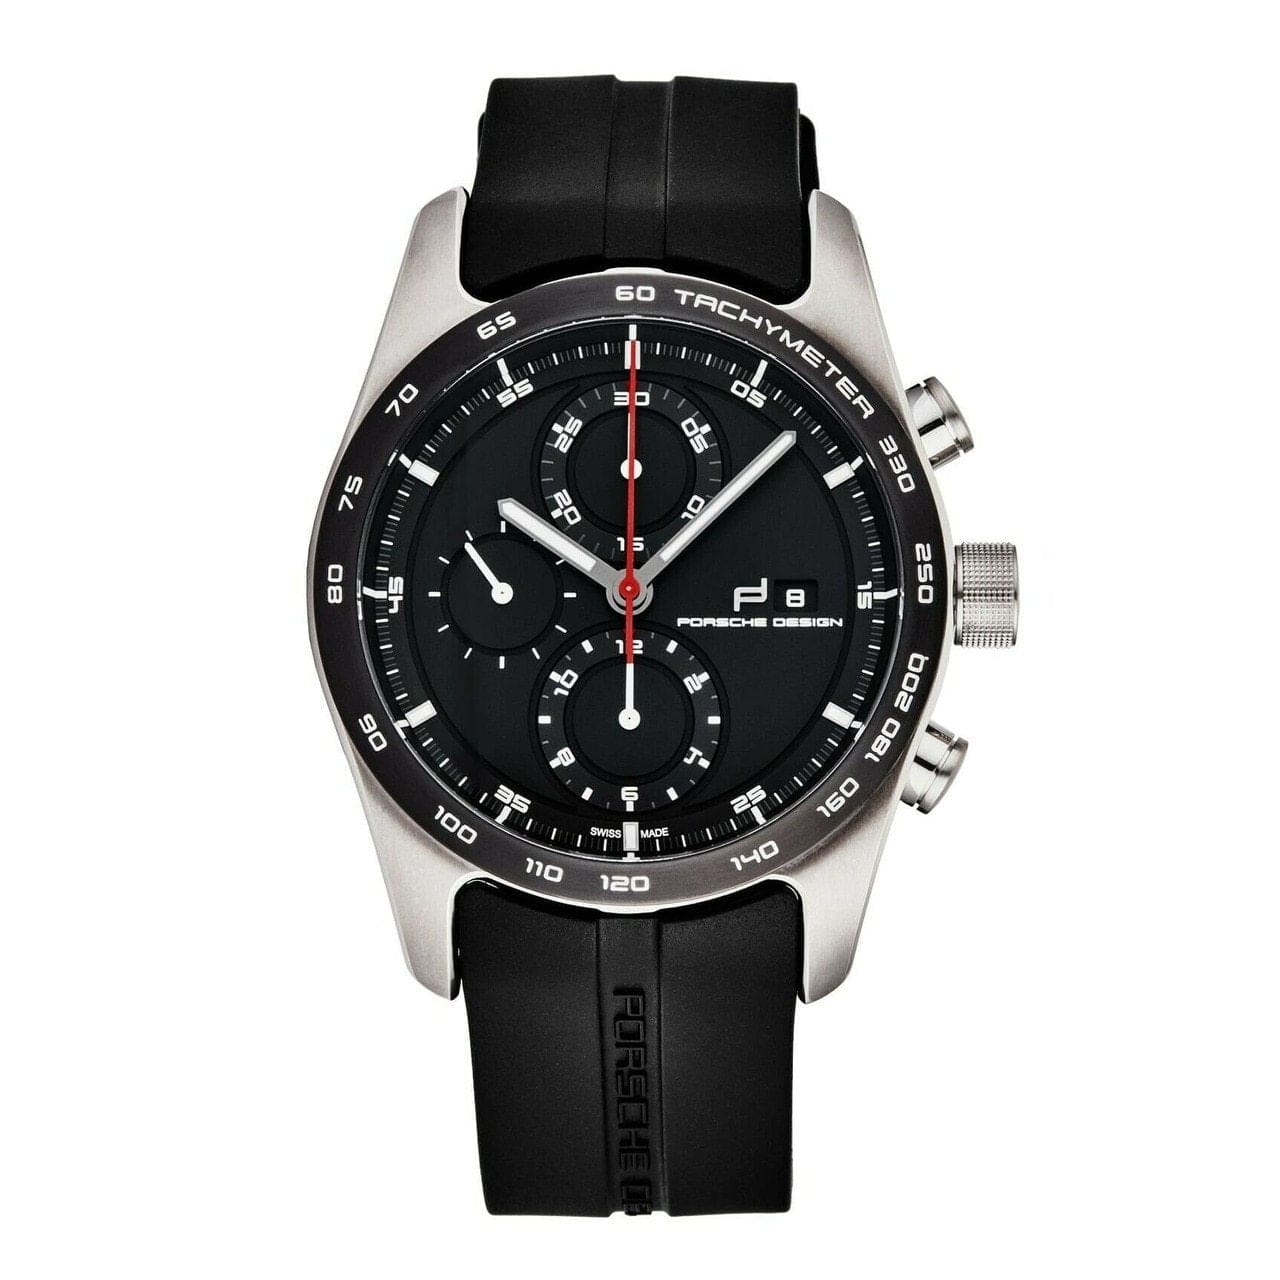 Porsche Design 6010.1090.01052 Chronotimer Series 1 Black Rubber Chronograph Automatic Watch